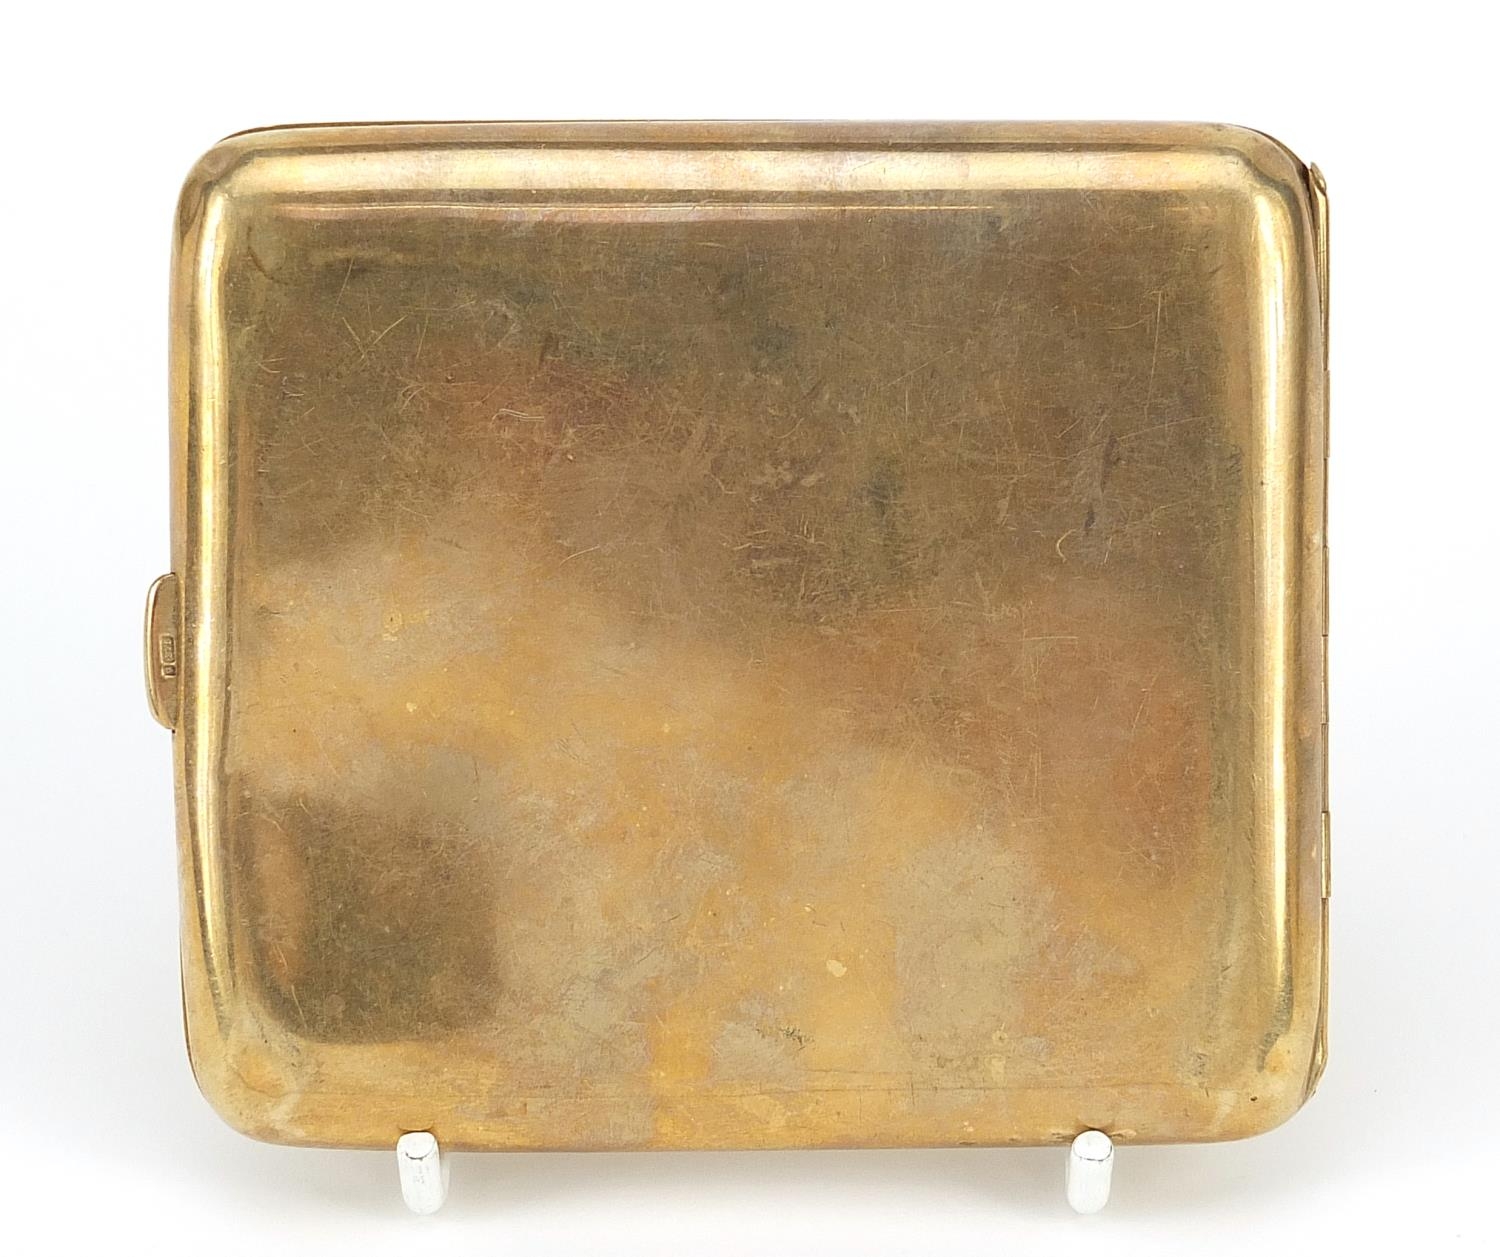 George V 9ct gold cigarette case, Birmingham 1919, 9.5cm x 8.6cm, 127.5g - this lot is sold - Image 5 of 6